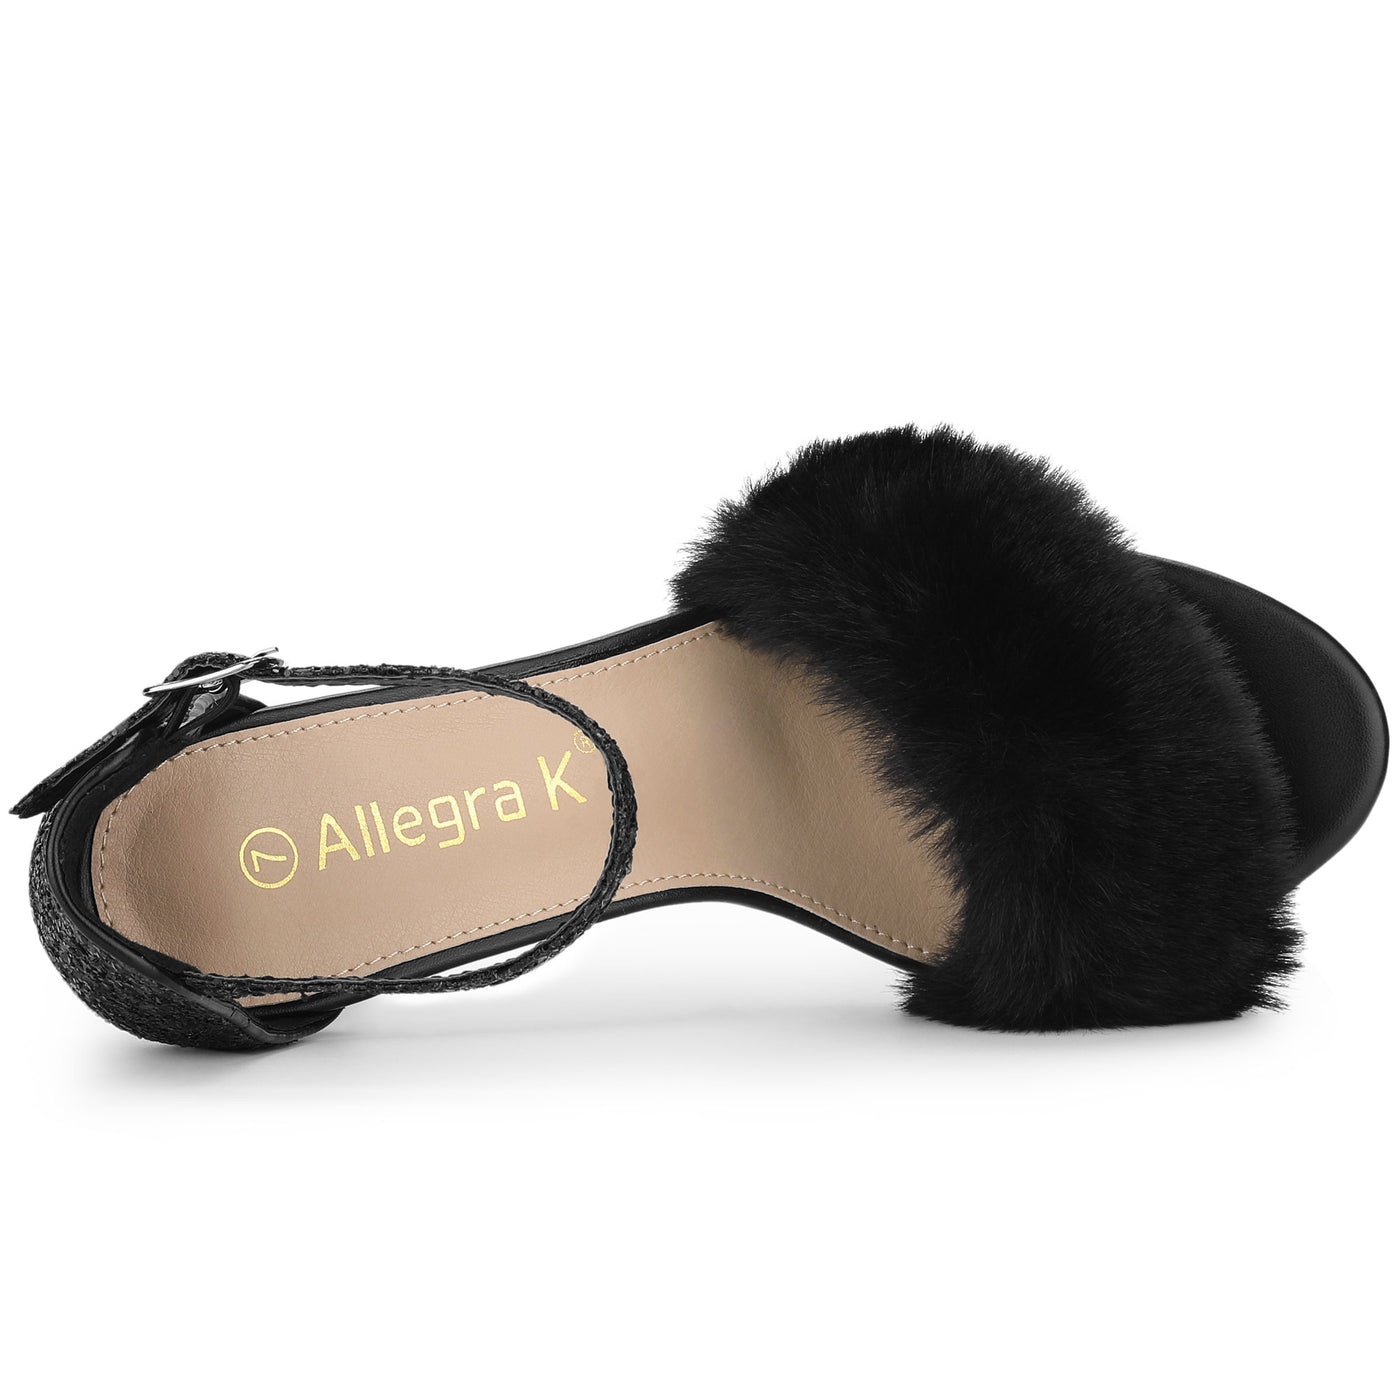 Allegra K Glitter Faux Fur Ankle Strap Stiletto Heel Sandals